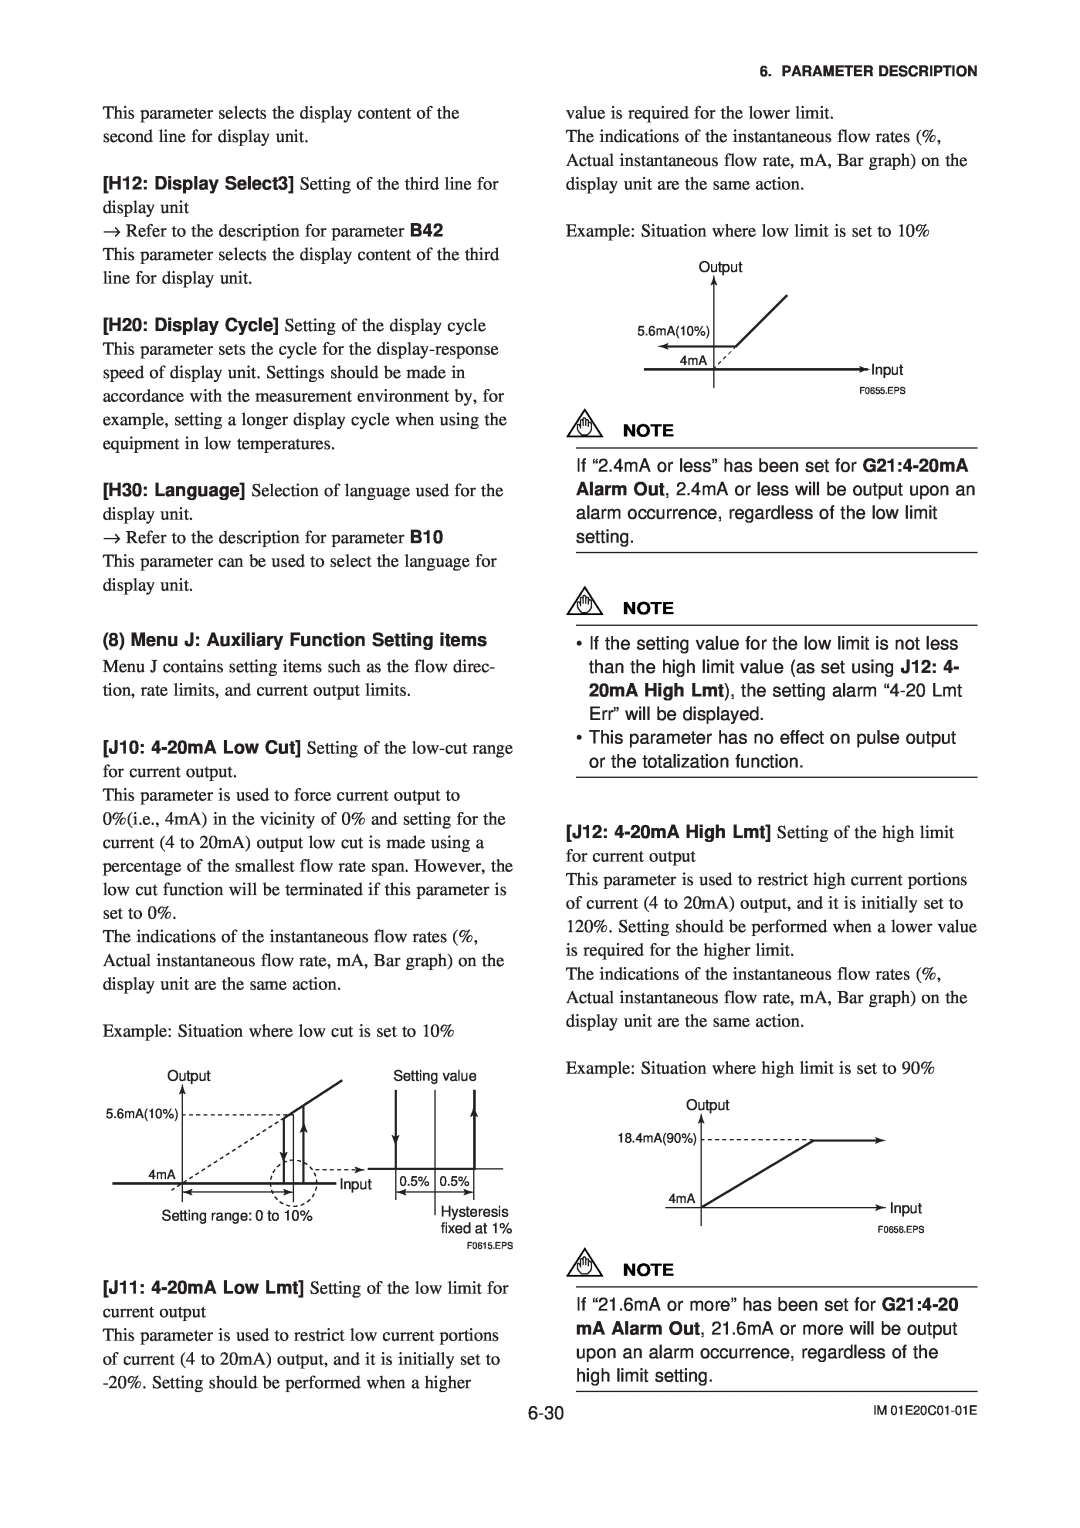 APC AXFA11G user manual Menu J Auxiliary Function Setting items 